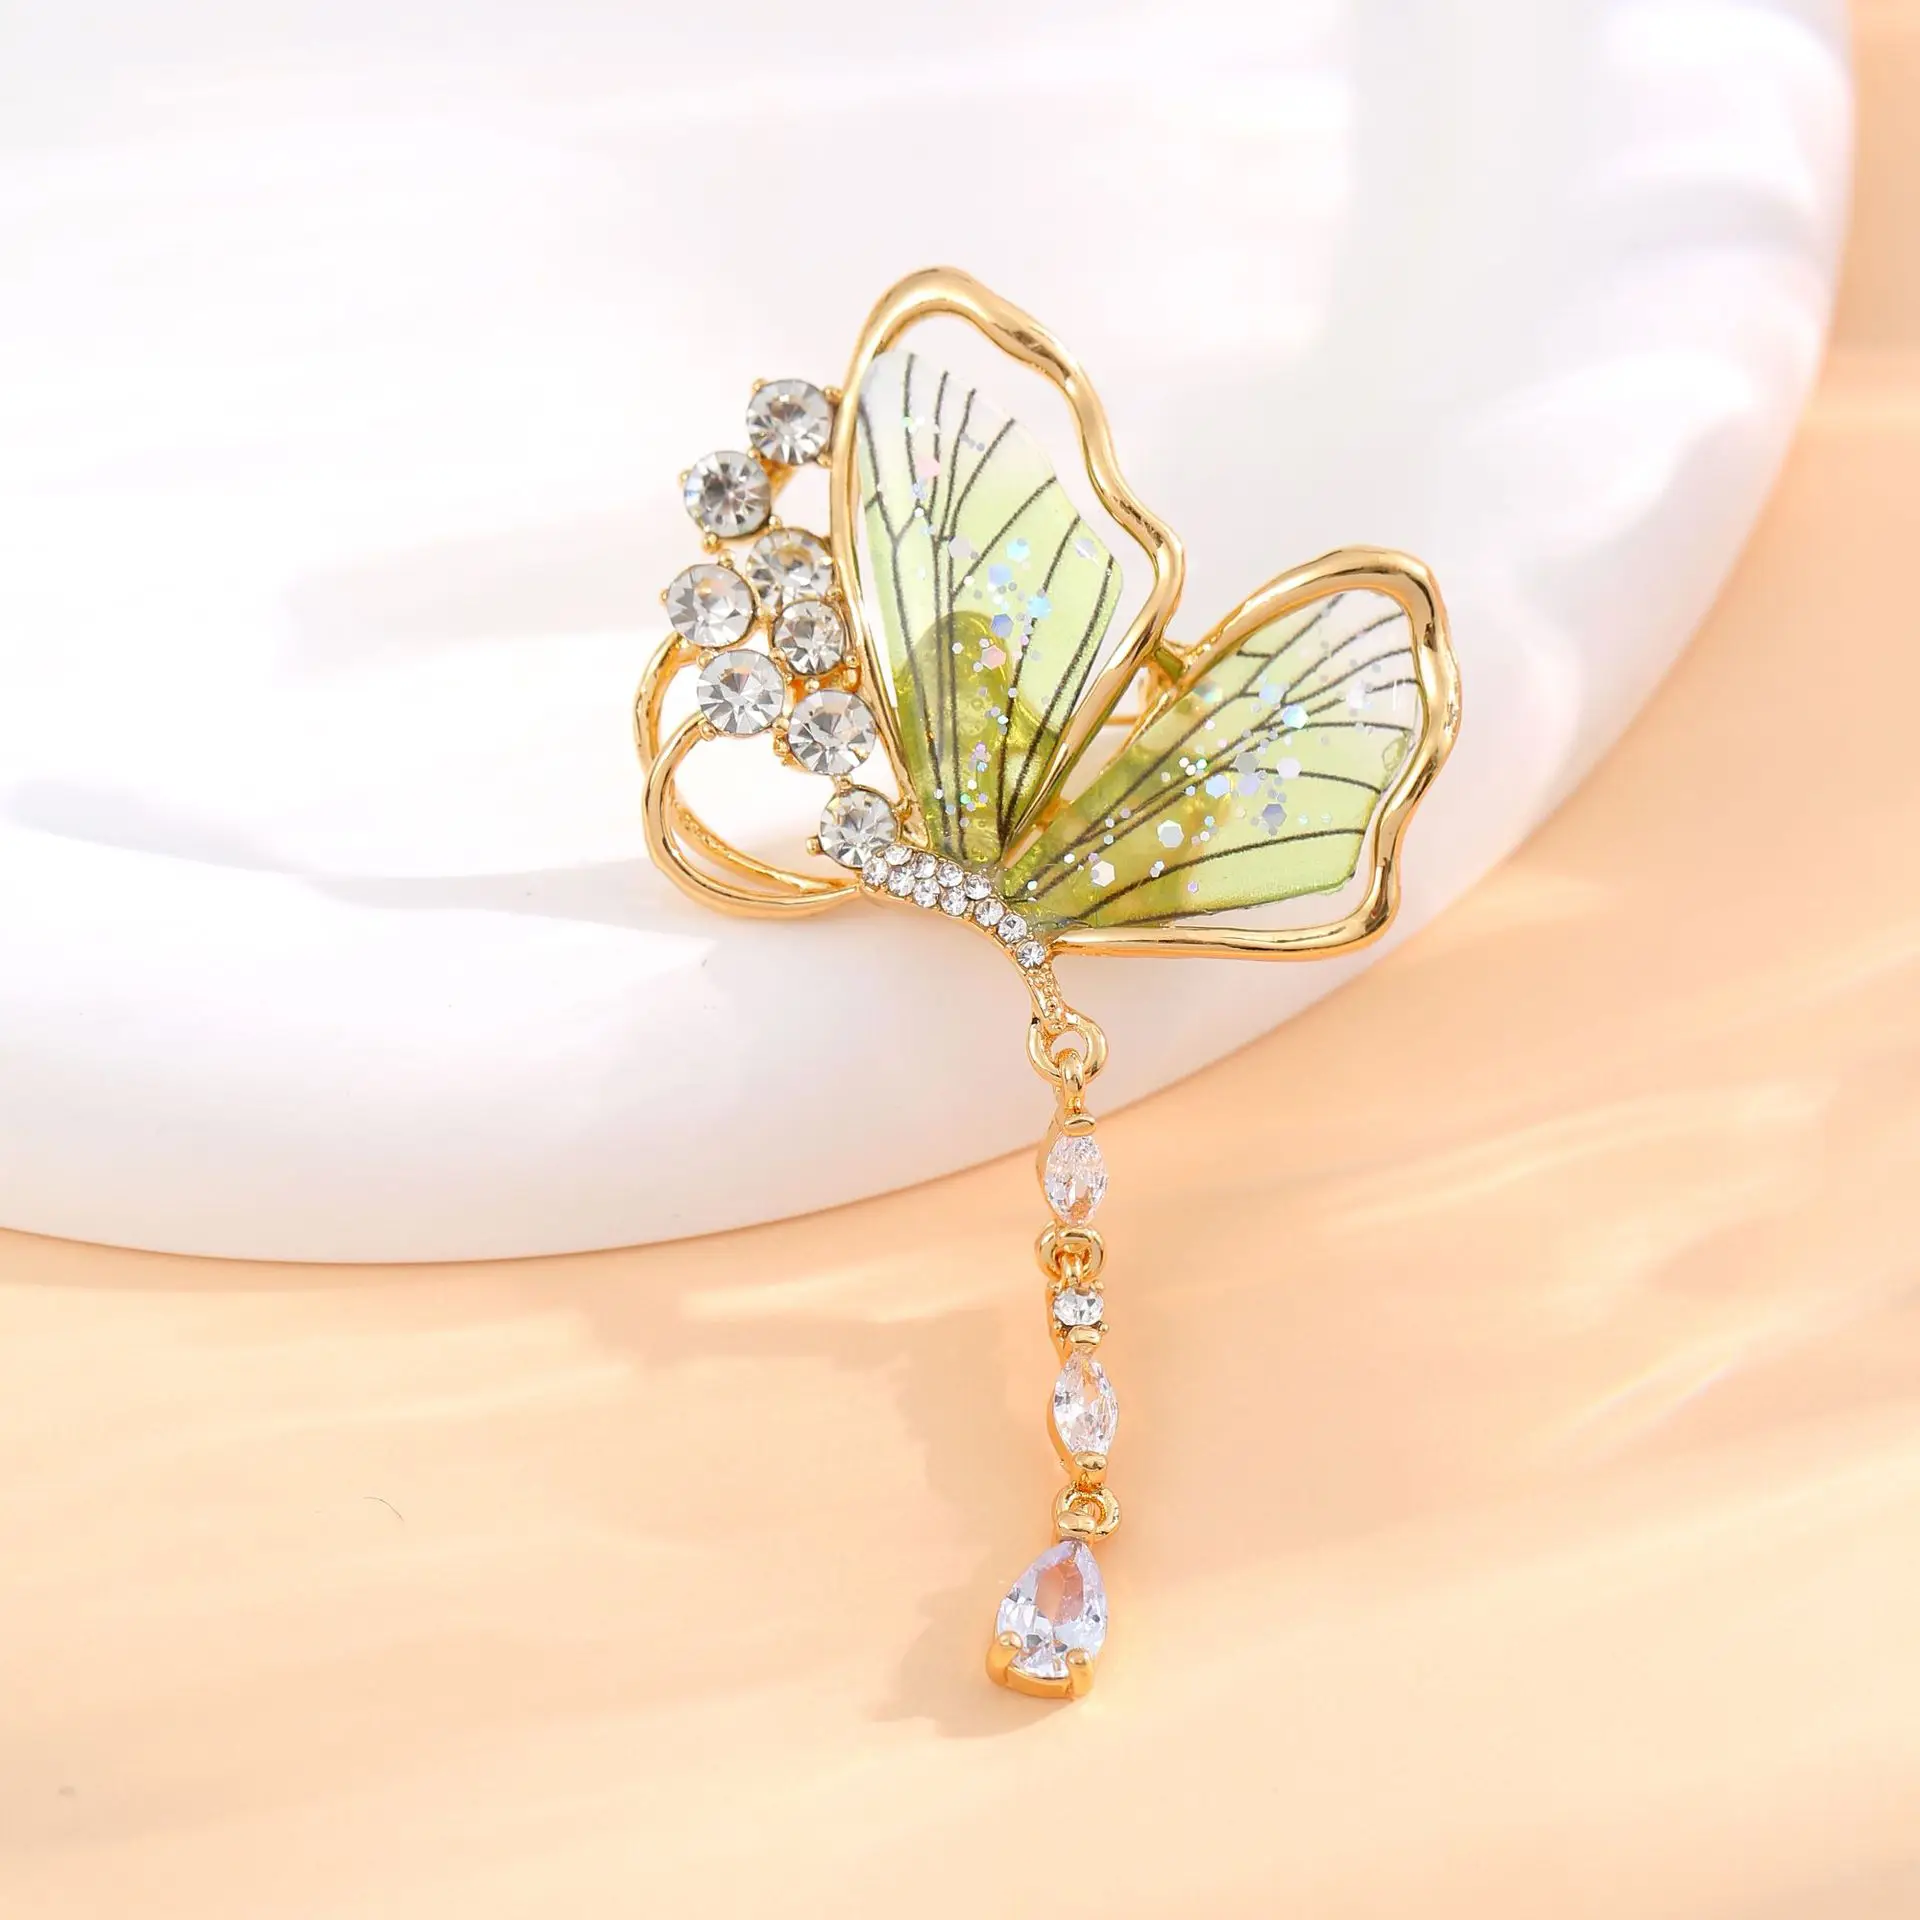 Broche Prendedor Ropa Para Mujer Cristal Mariposa